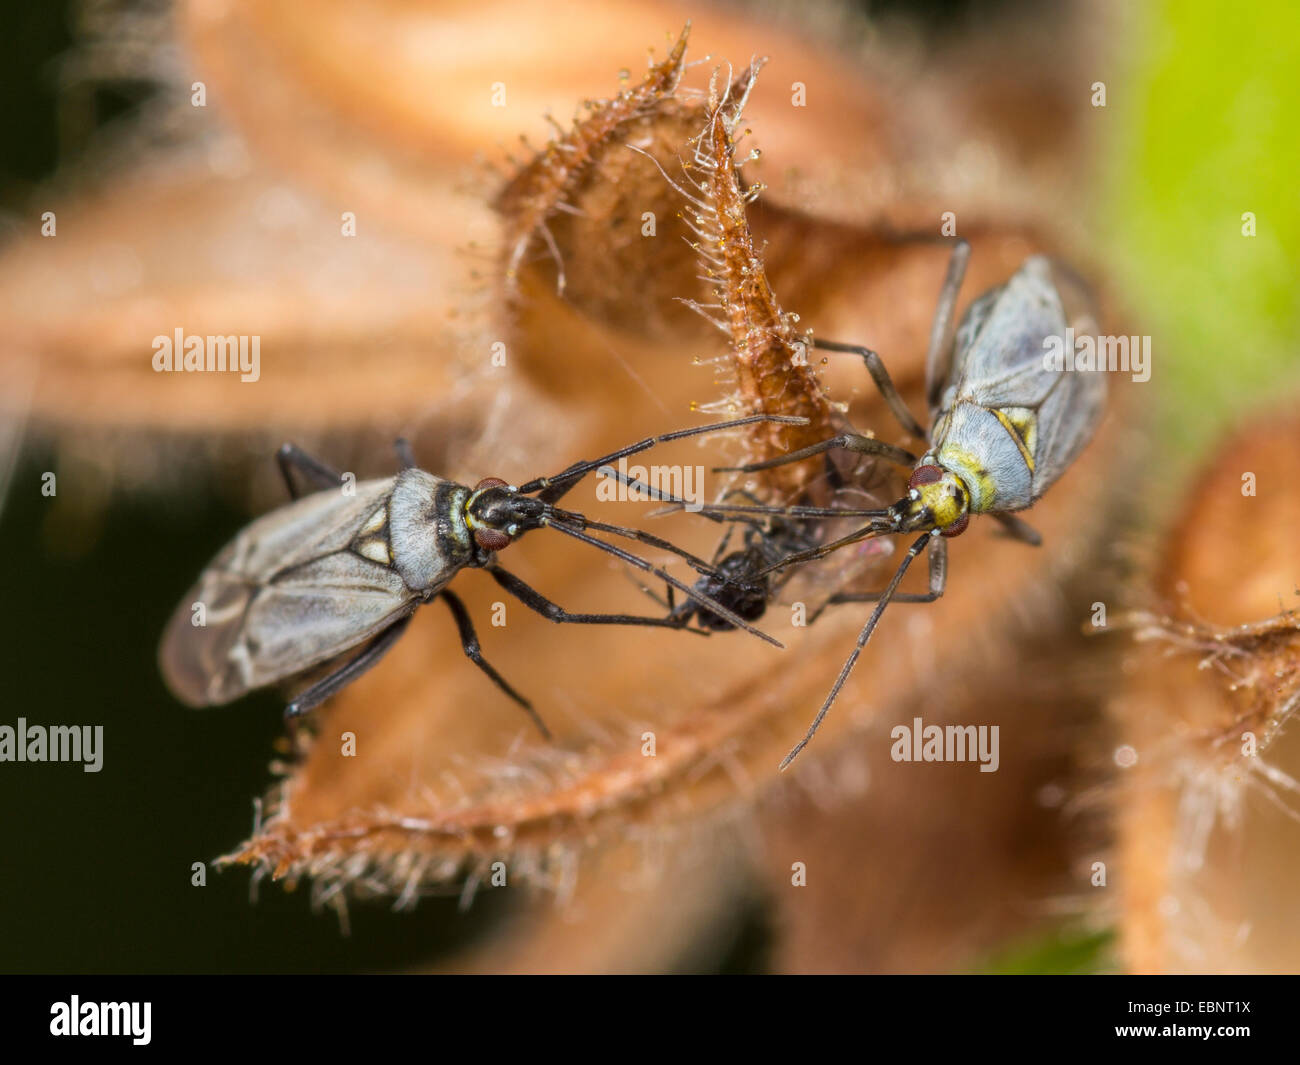 https://c8.alamy.com/comp/EBNT1X/capsid-bug-macrotylus-herrichi-females-suck-captured-spider-on-salvia-EBNT1X.jpg